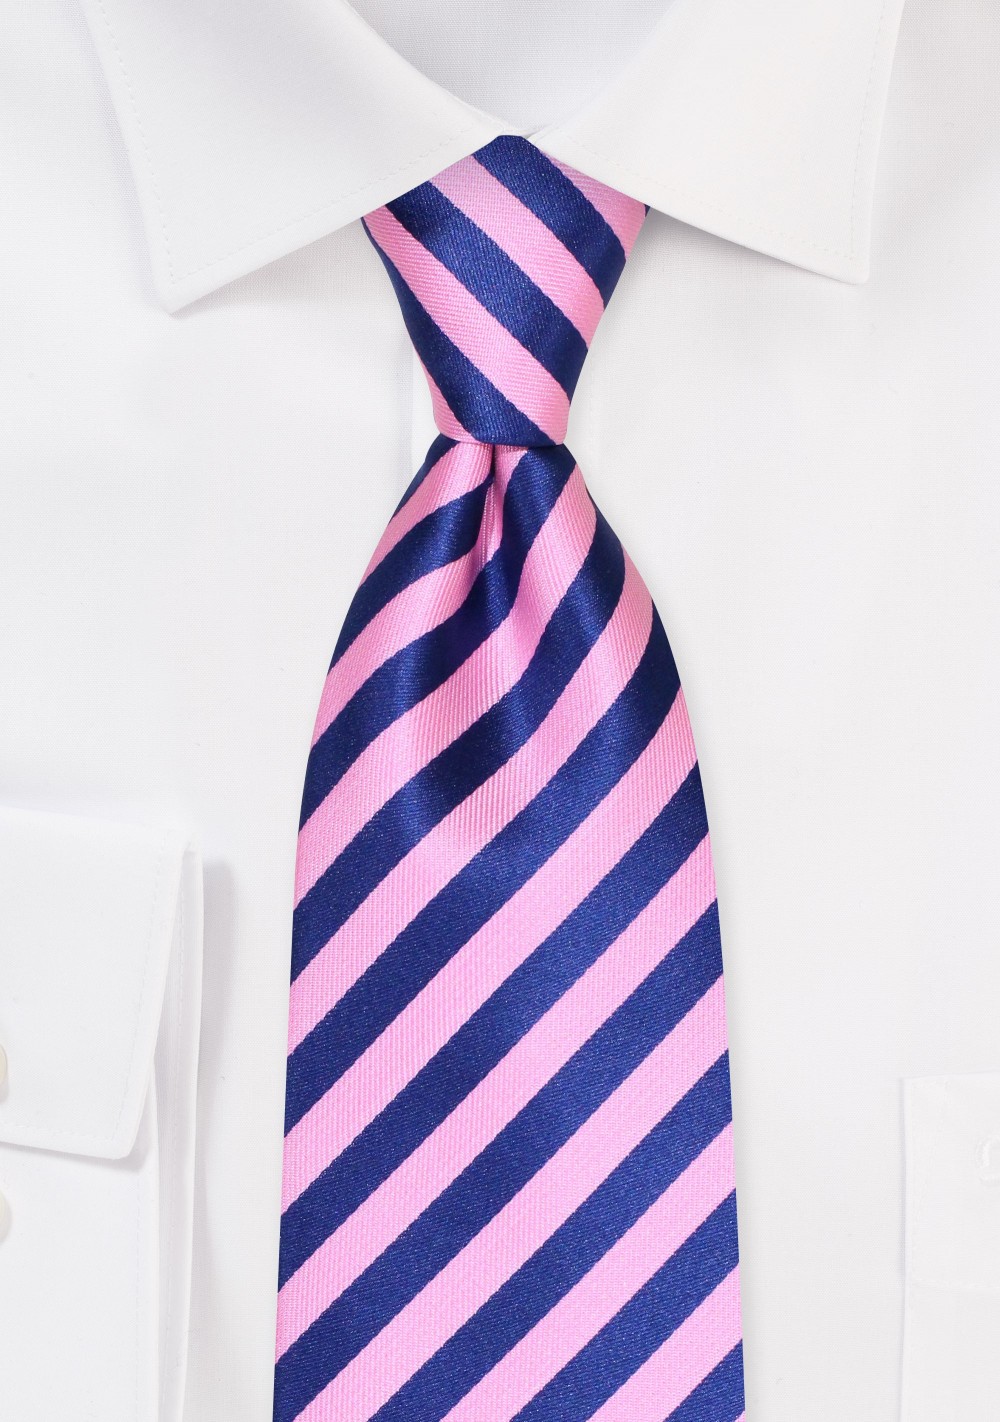 Preppy Stripe Tie in Flamingo Pink and Navy